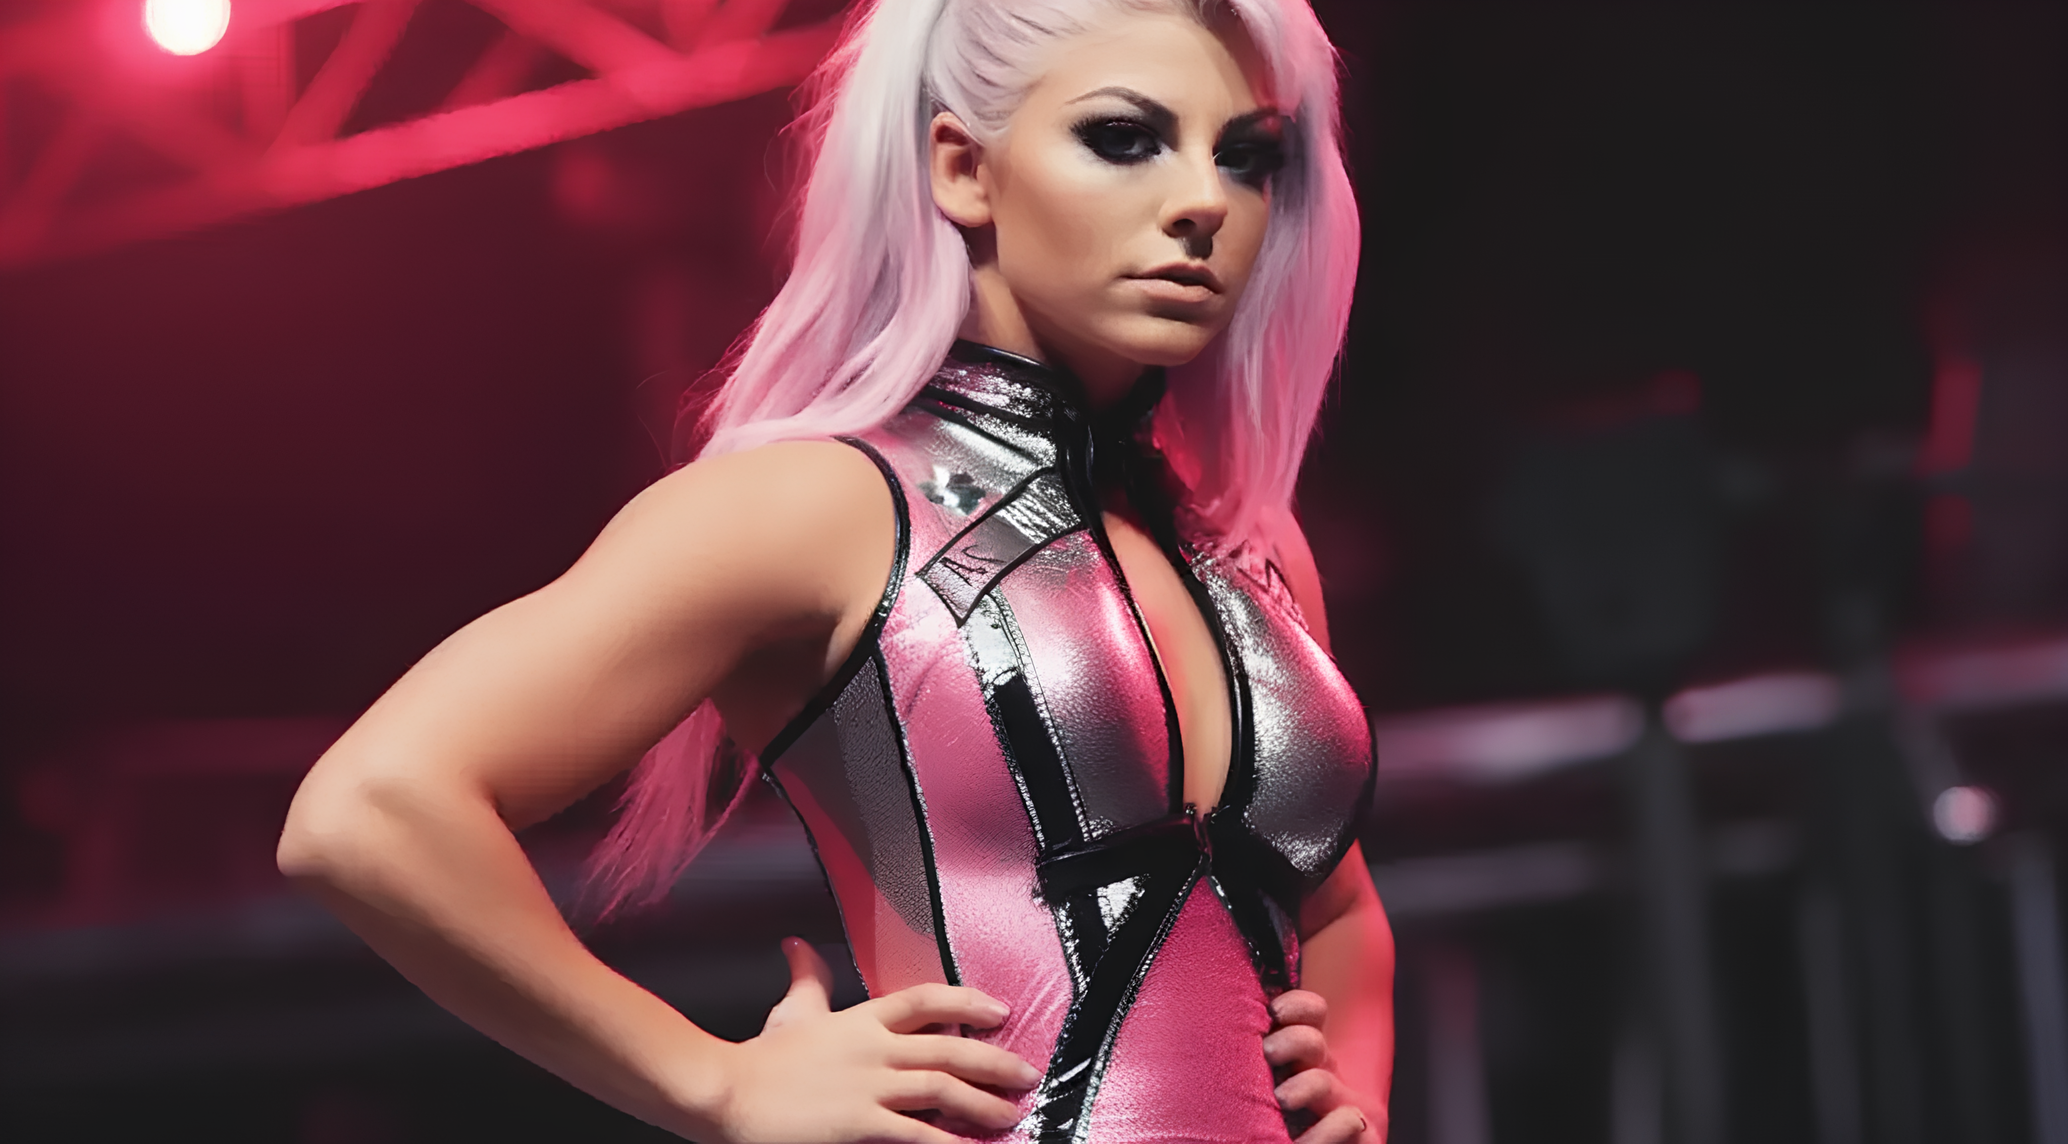 Alexa Bliss Confronts Disturbing Threat from Fans on WWE Return